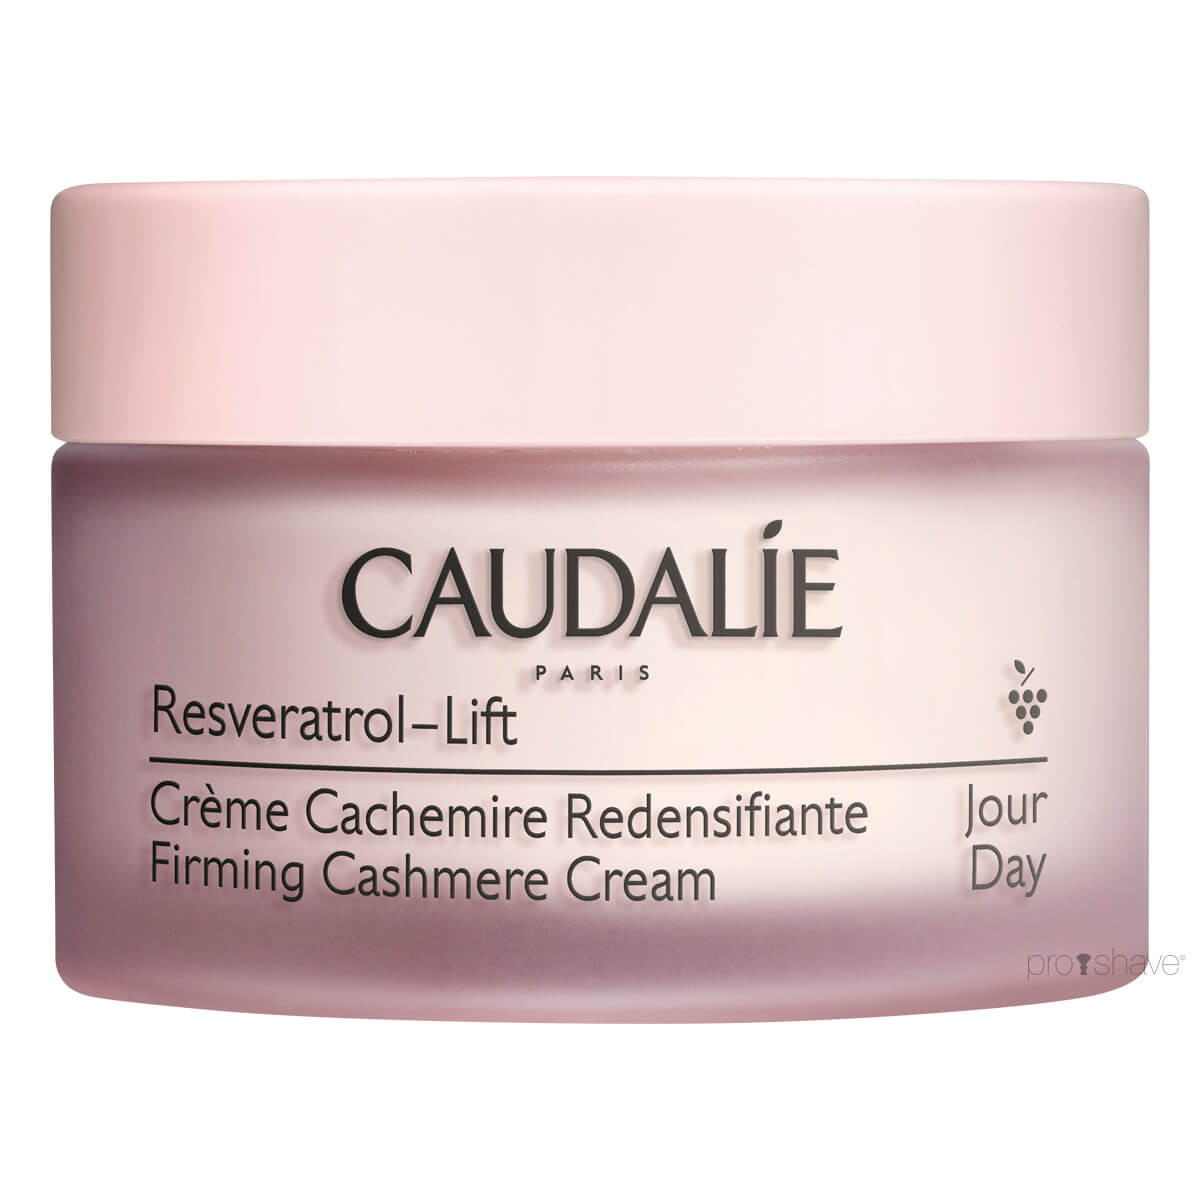 Billede af Caudalie Resveratrol Lift, Firming Cashmere Cream, 50 ml.